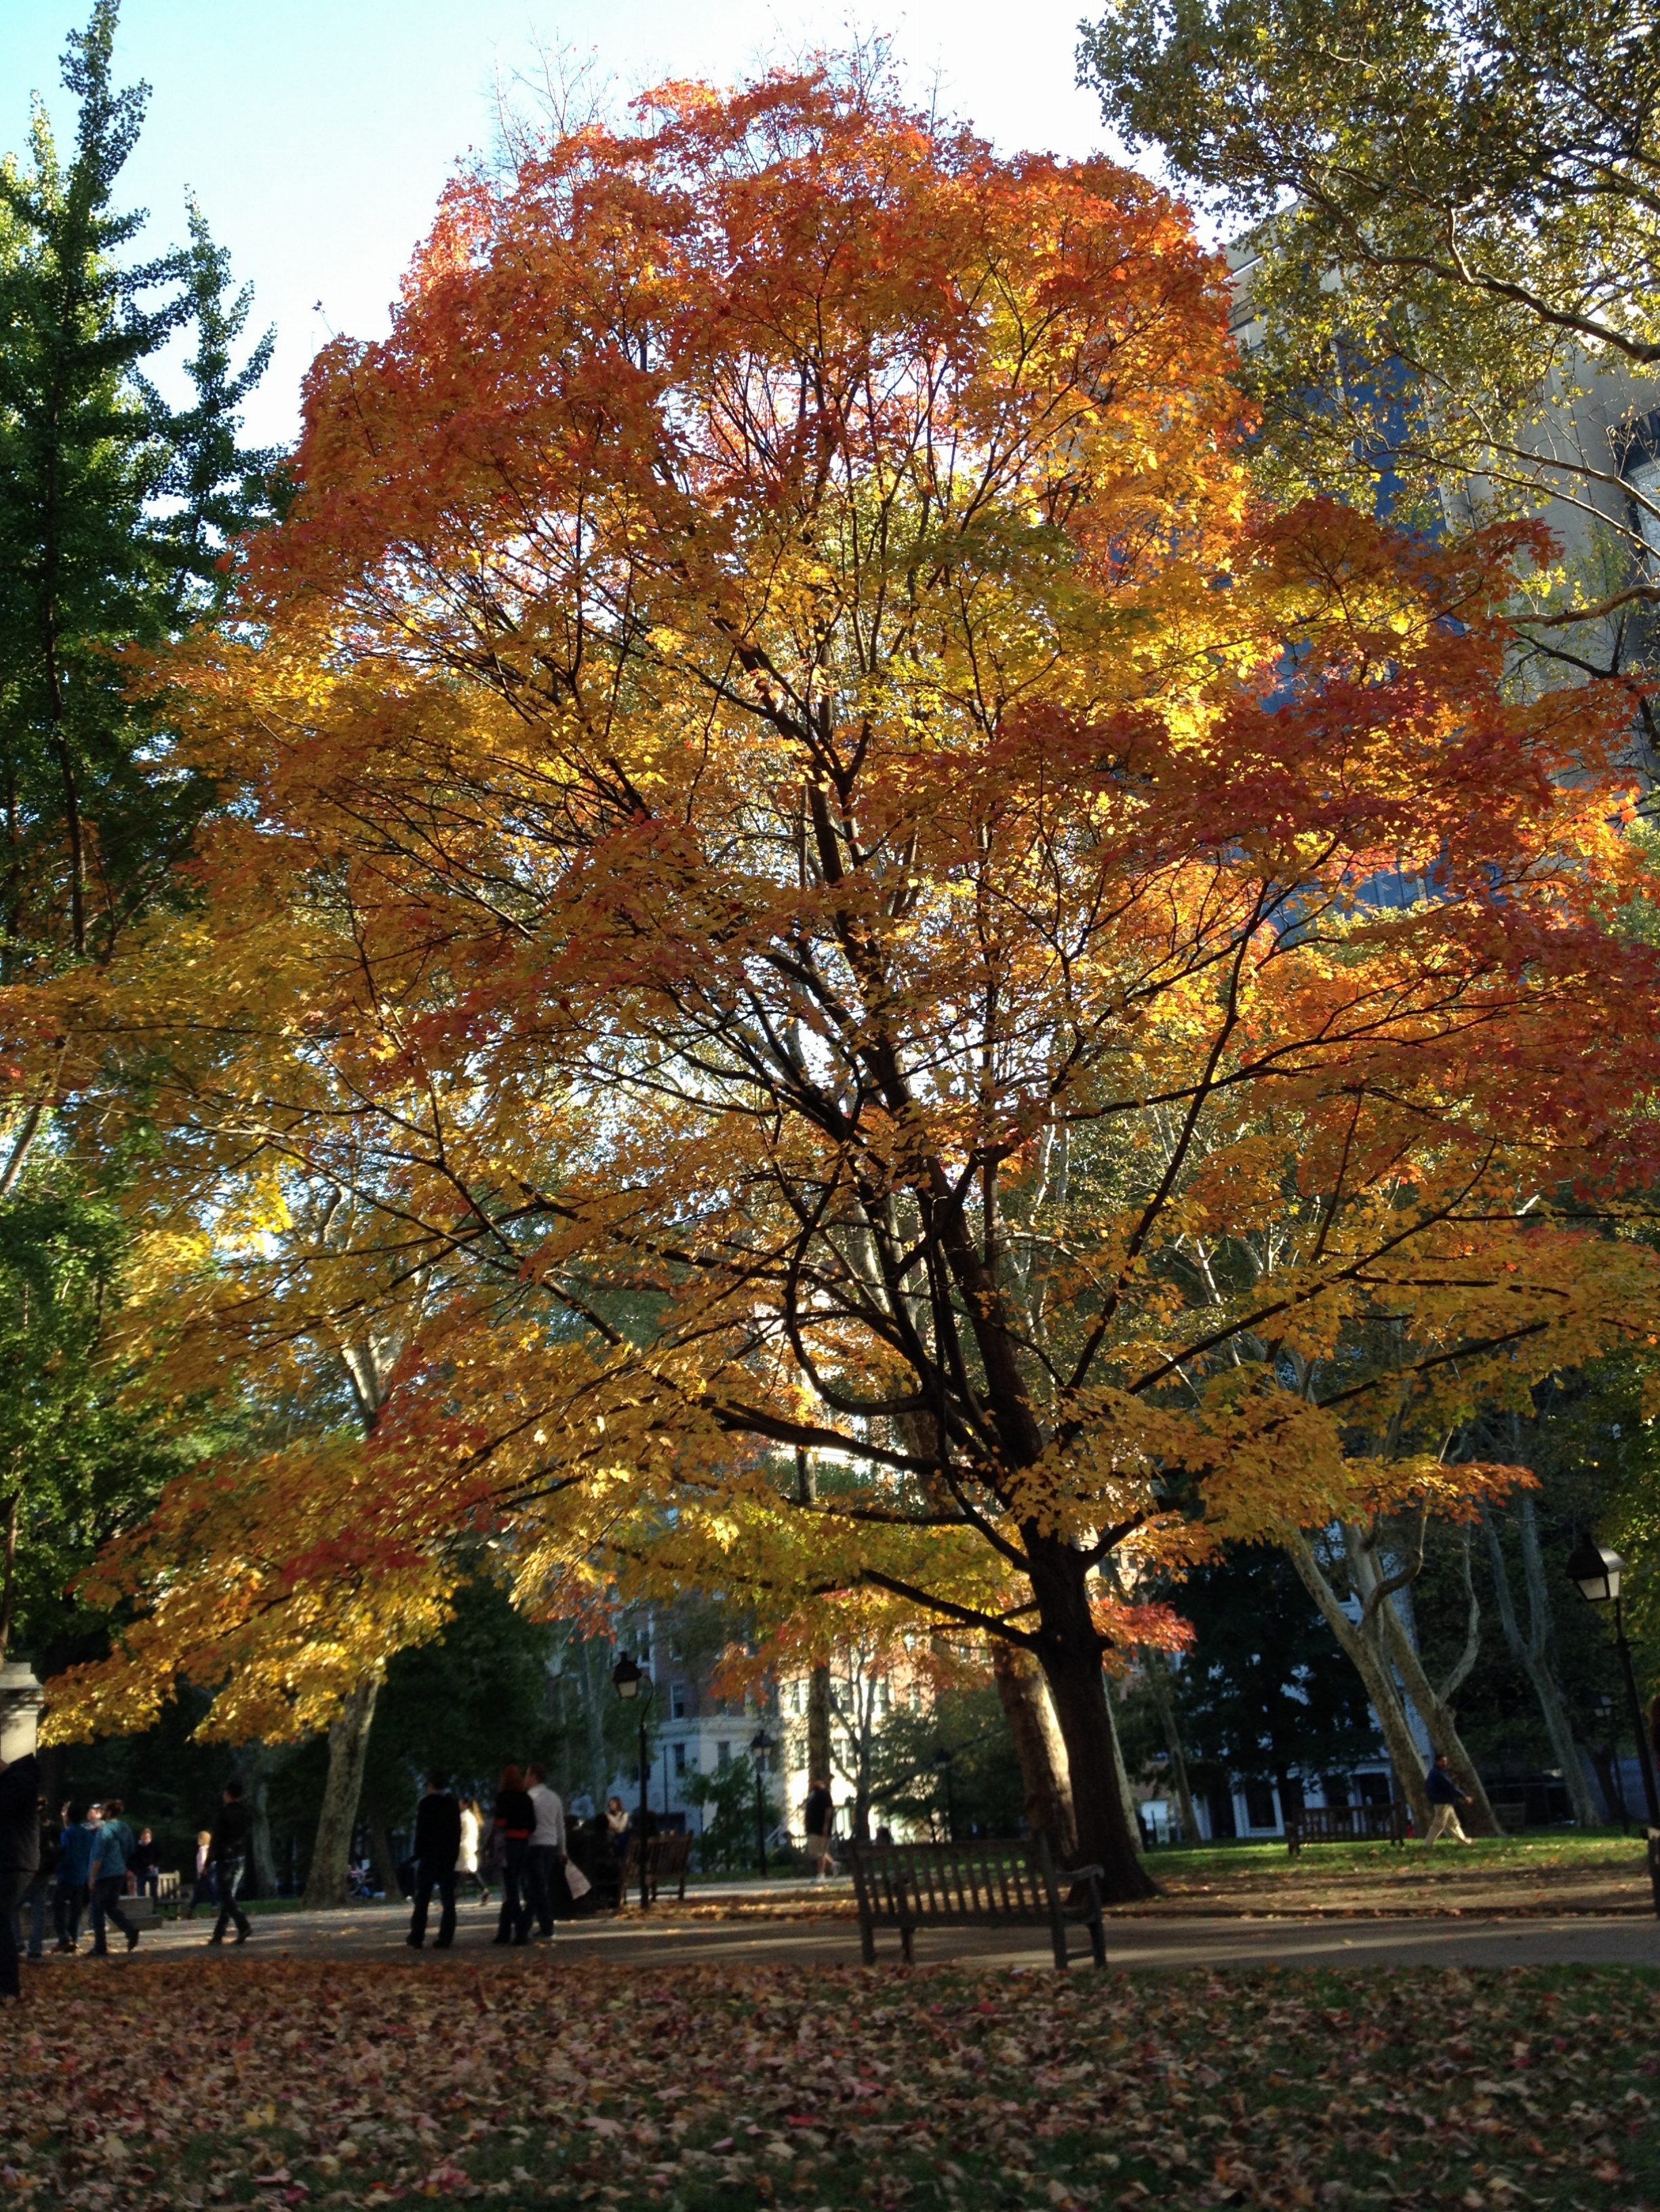 A massive tree changing colors in Philadelphia's Washington Square Park.